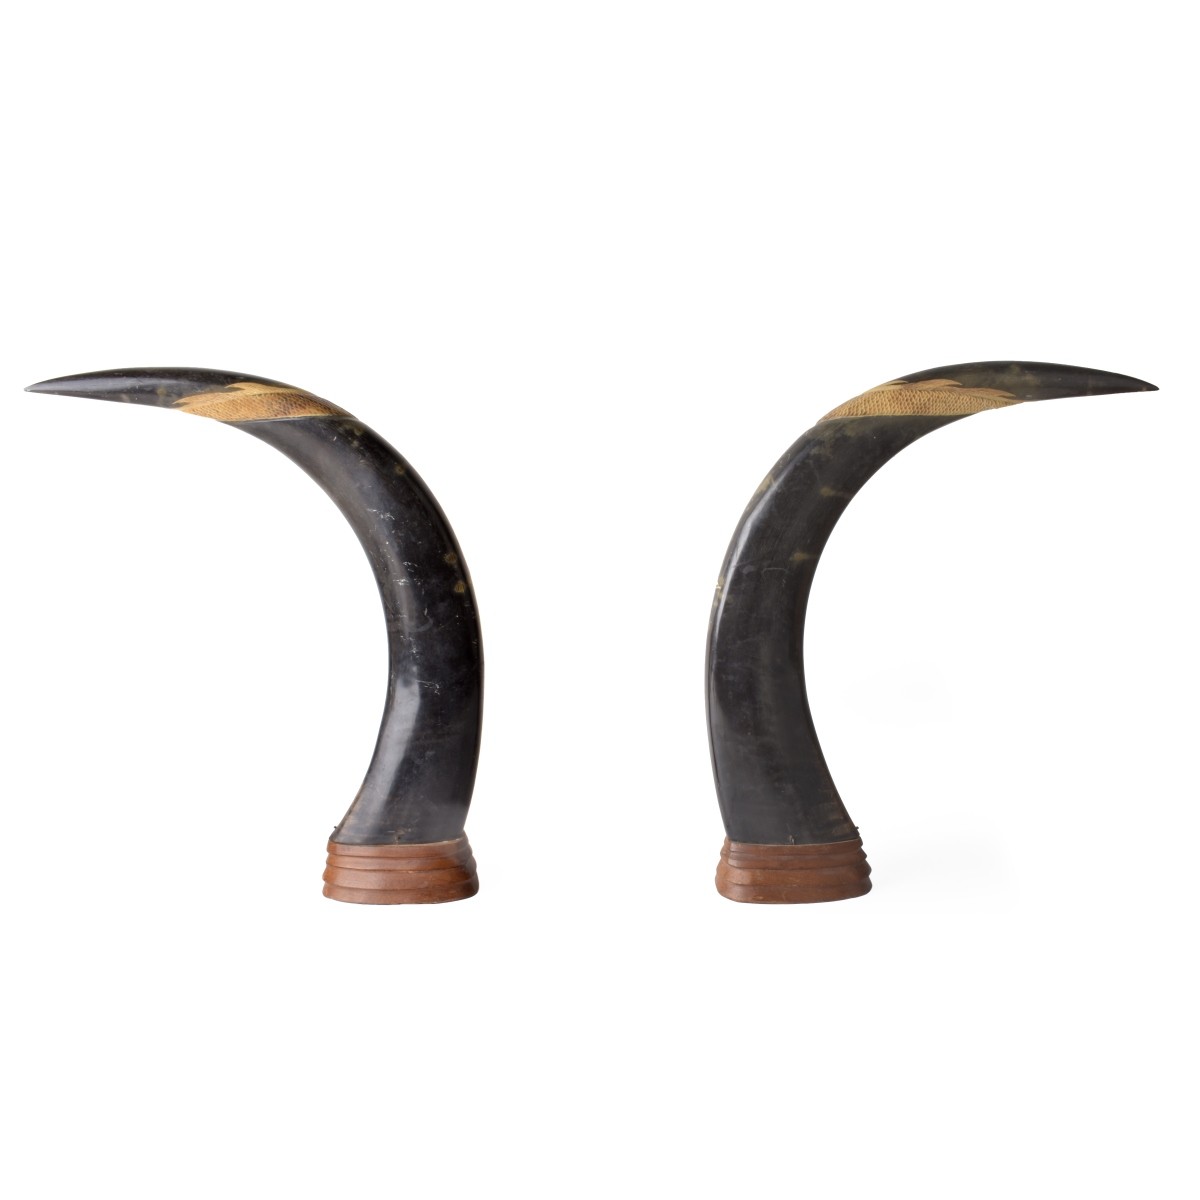 Pair of Japanese Water Buffalo Horns